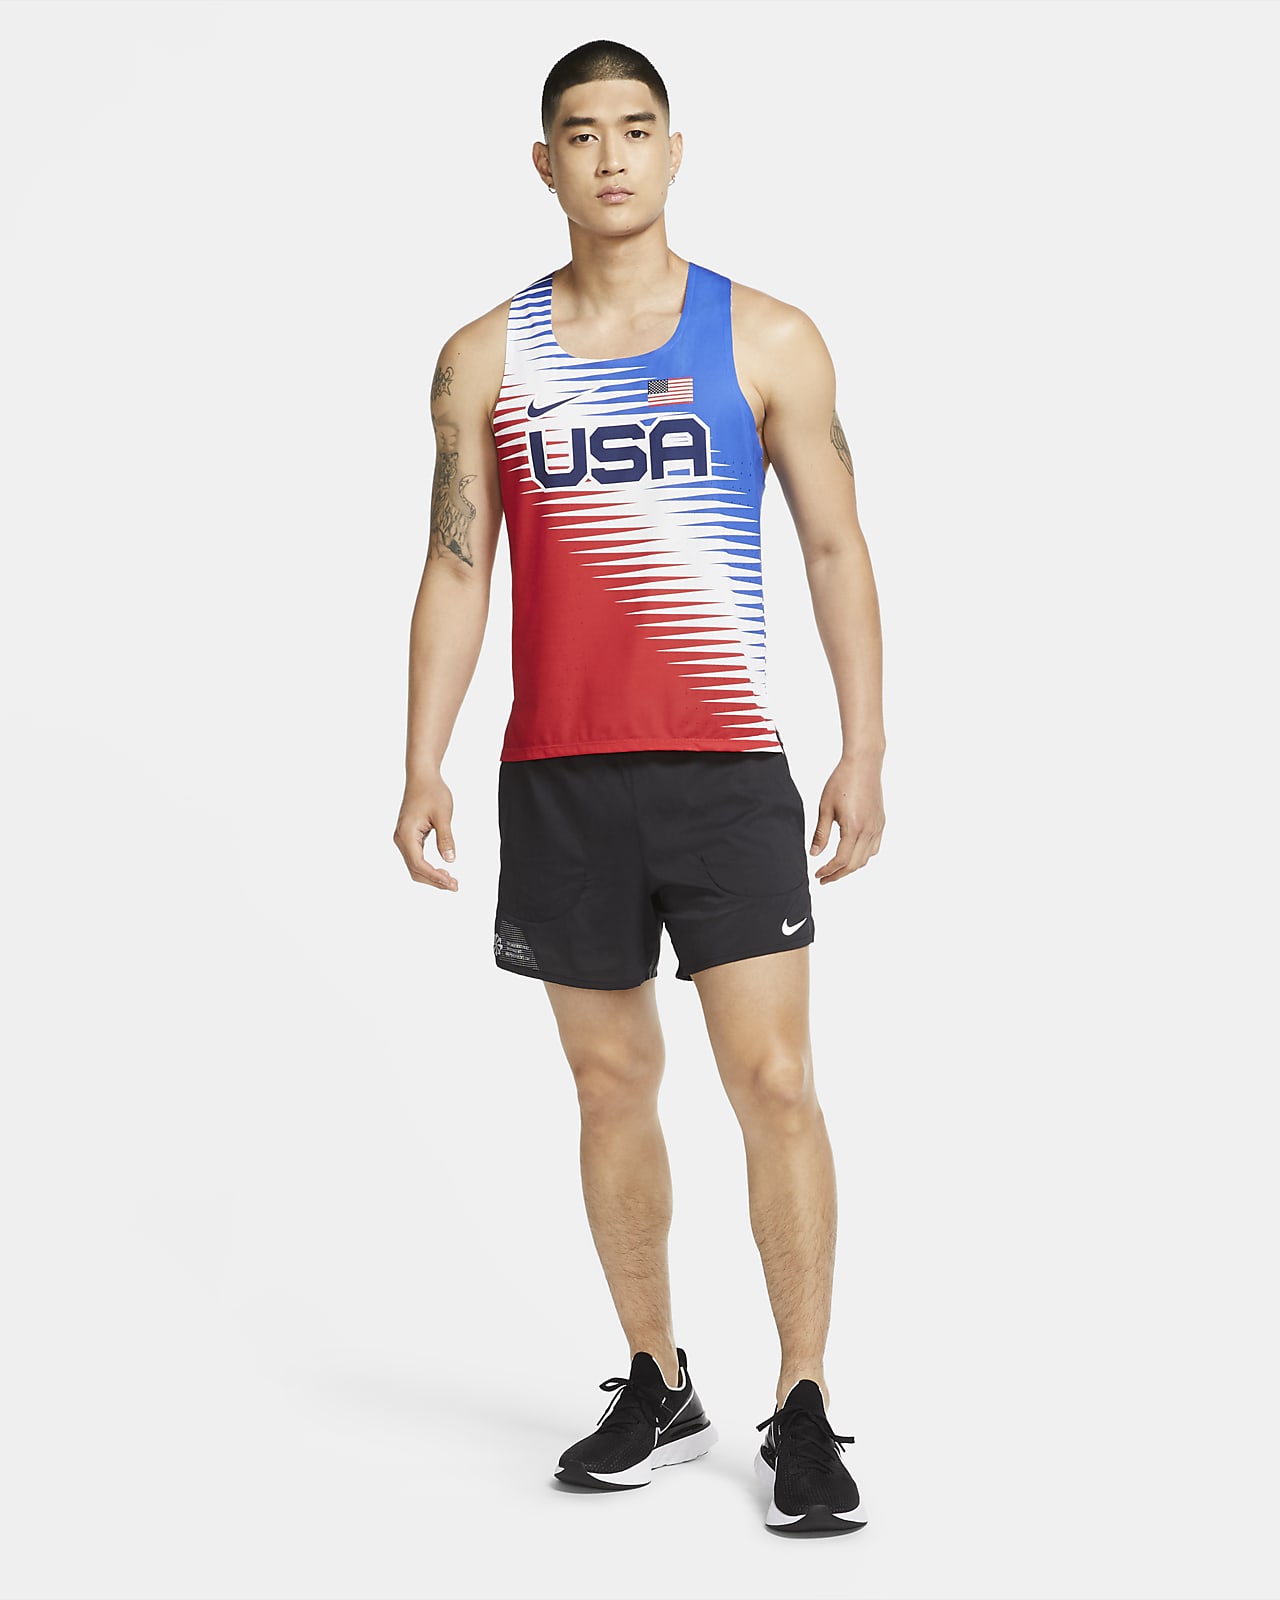 Nike Dri-FIT ADV Team USA AeroSwift Men's Running Singlet